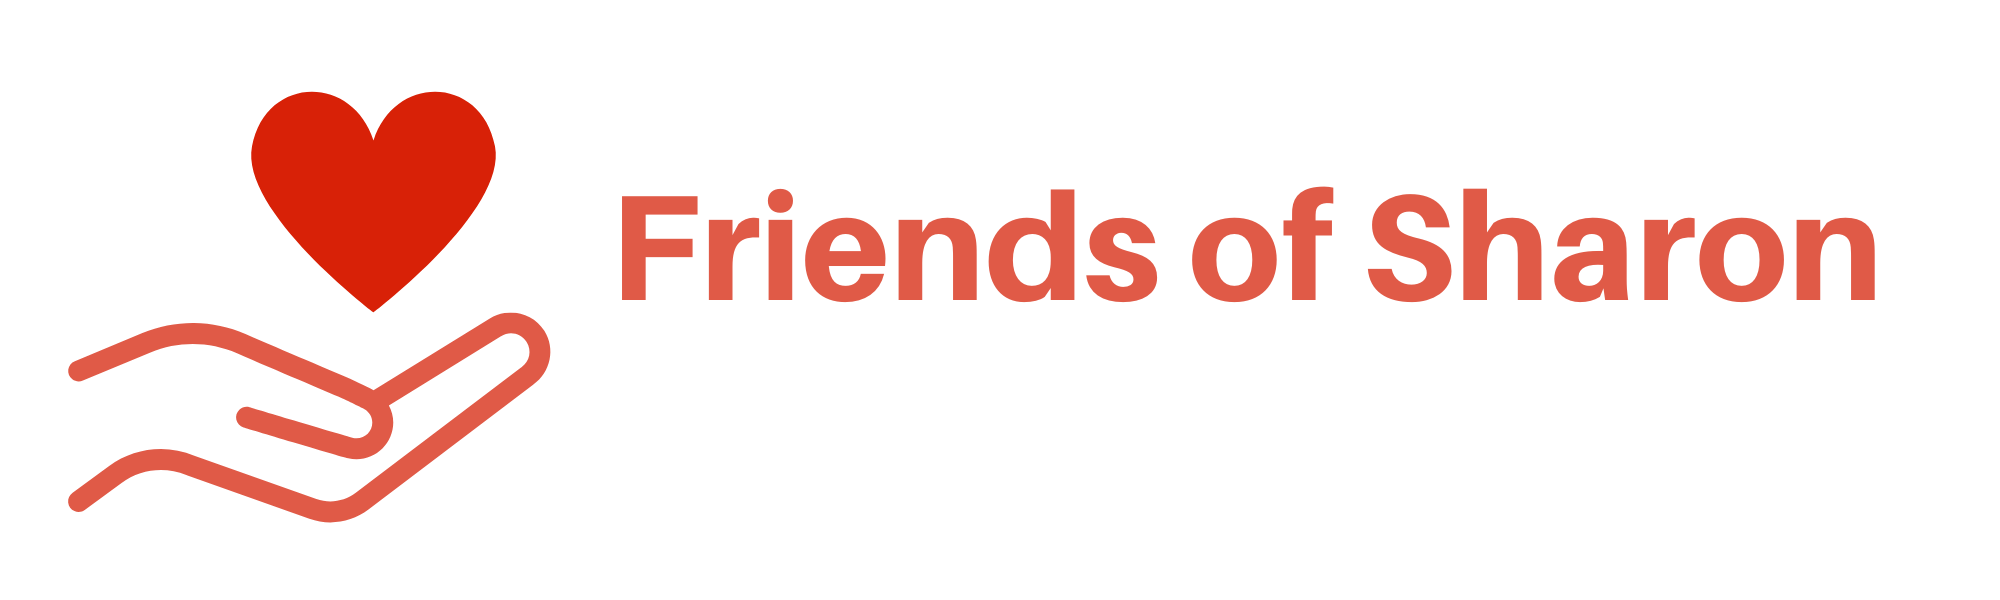 Friends of Sharon logo